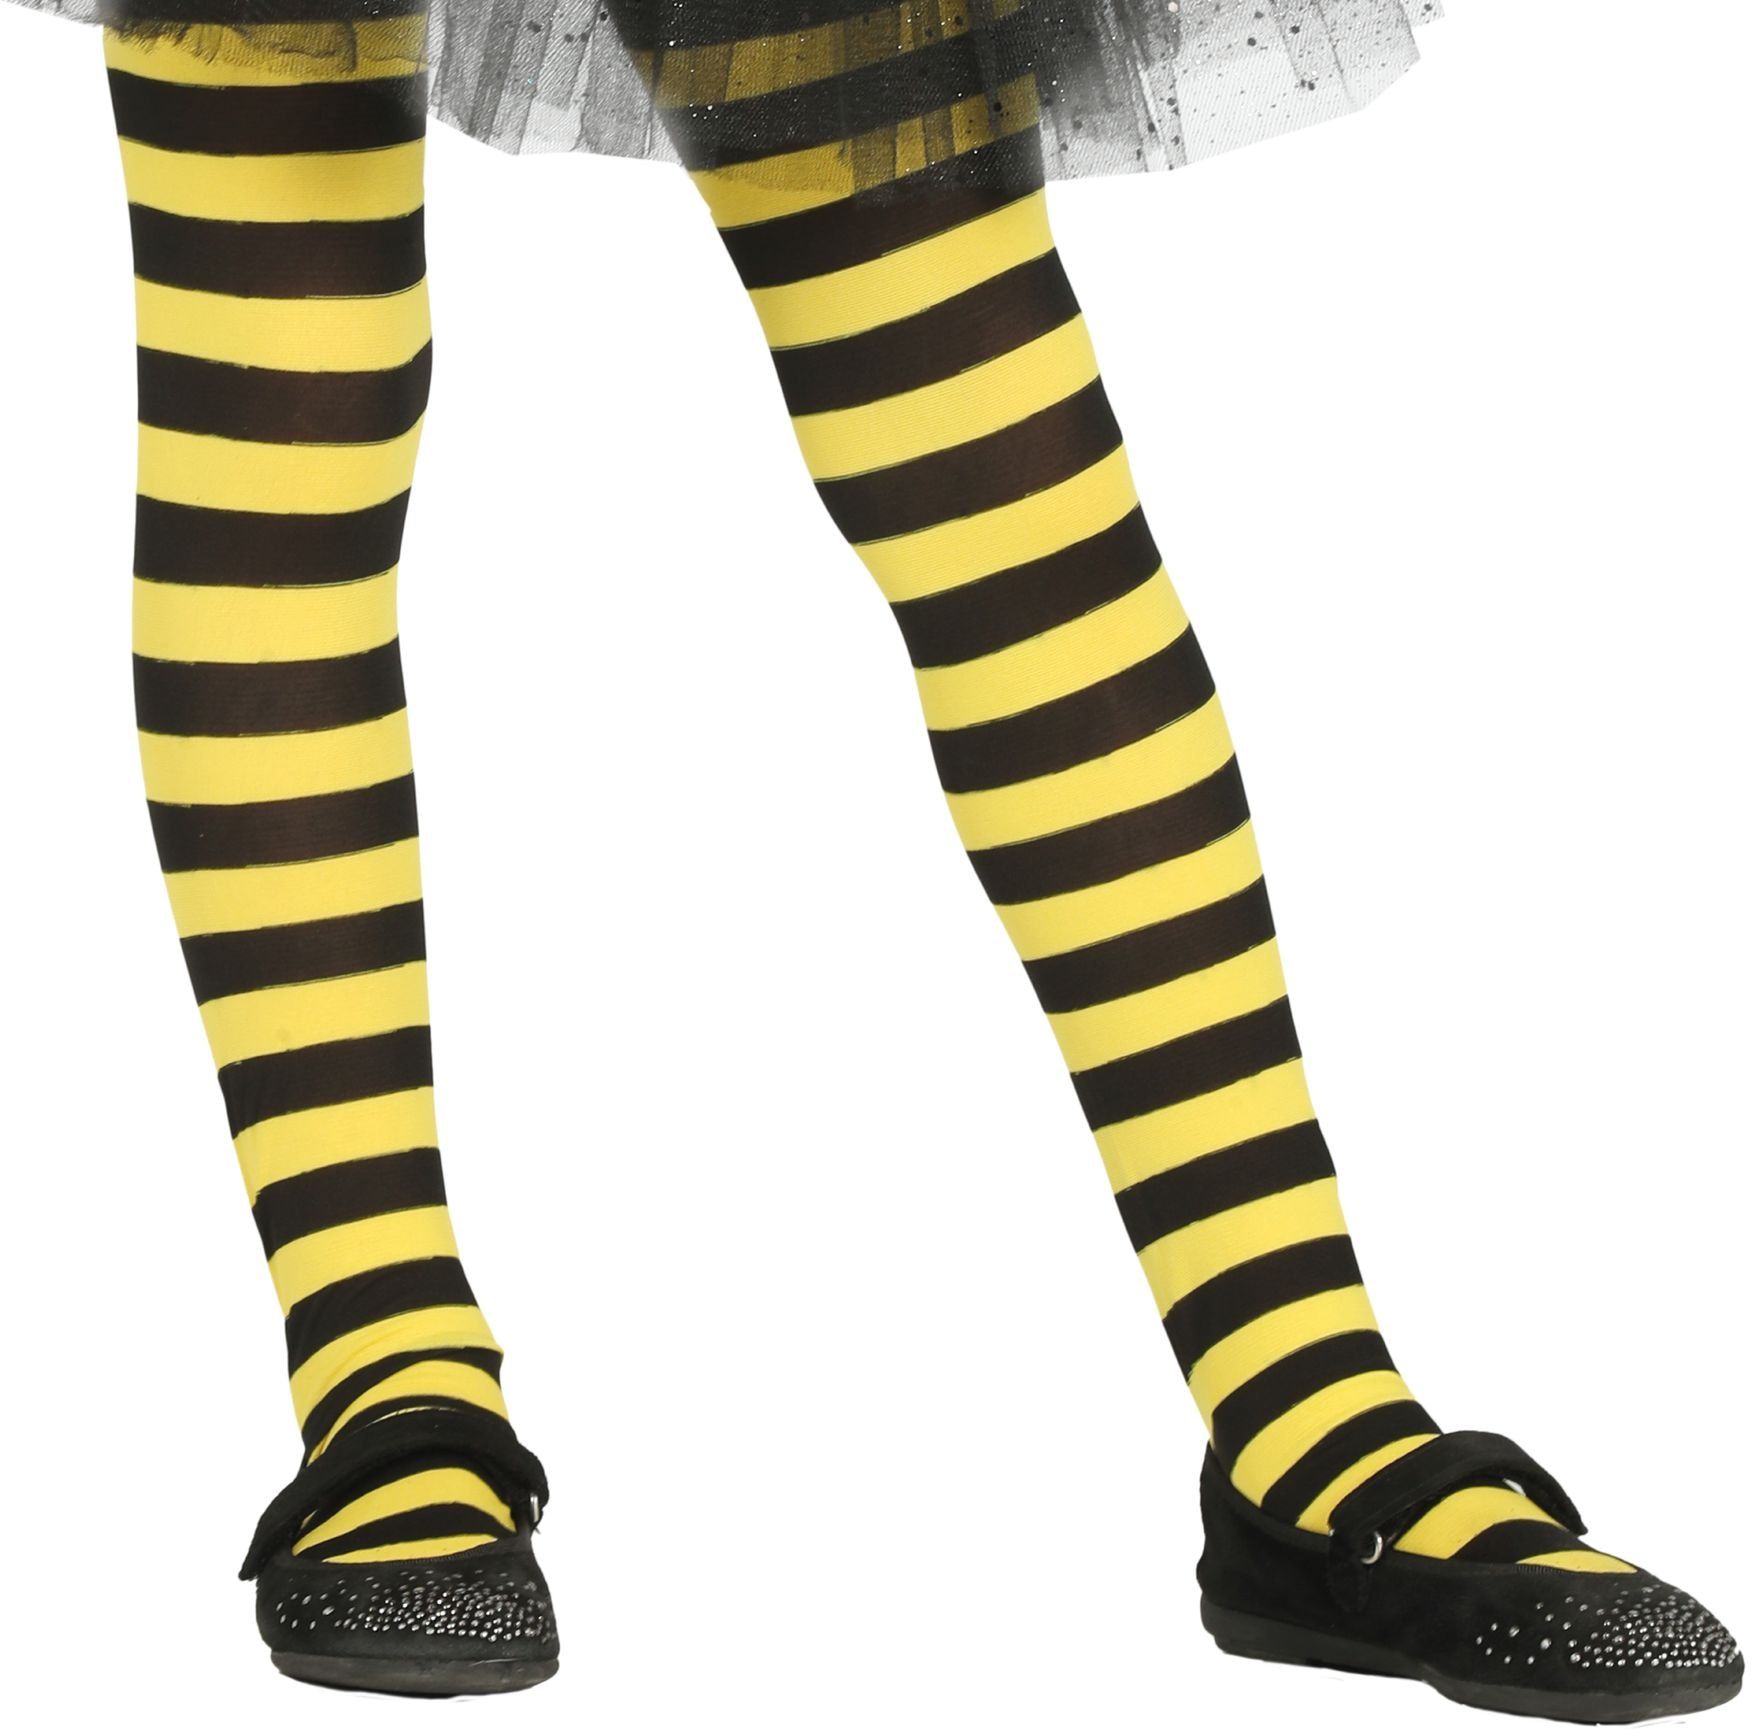 Geel zwart bijen maillot kind